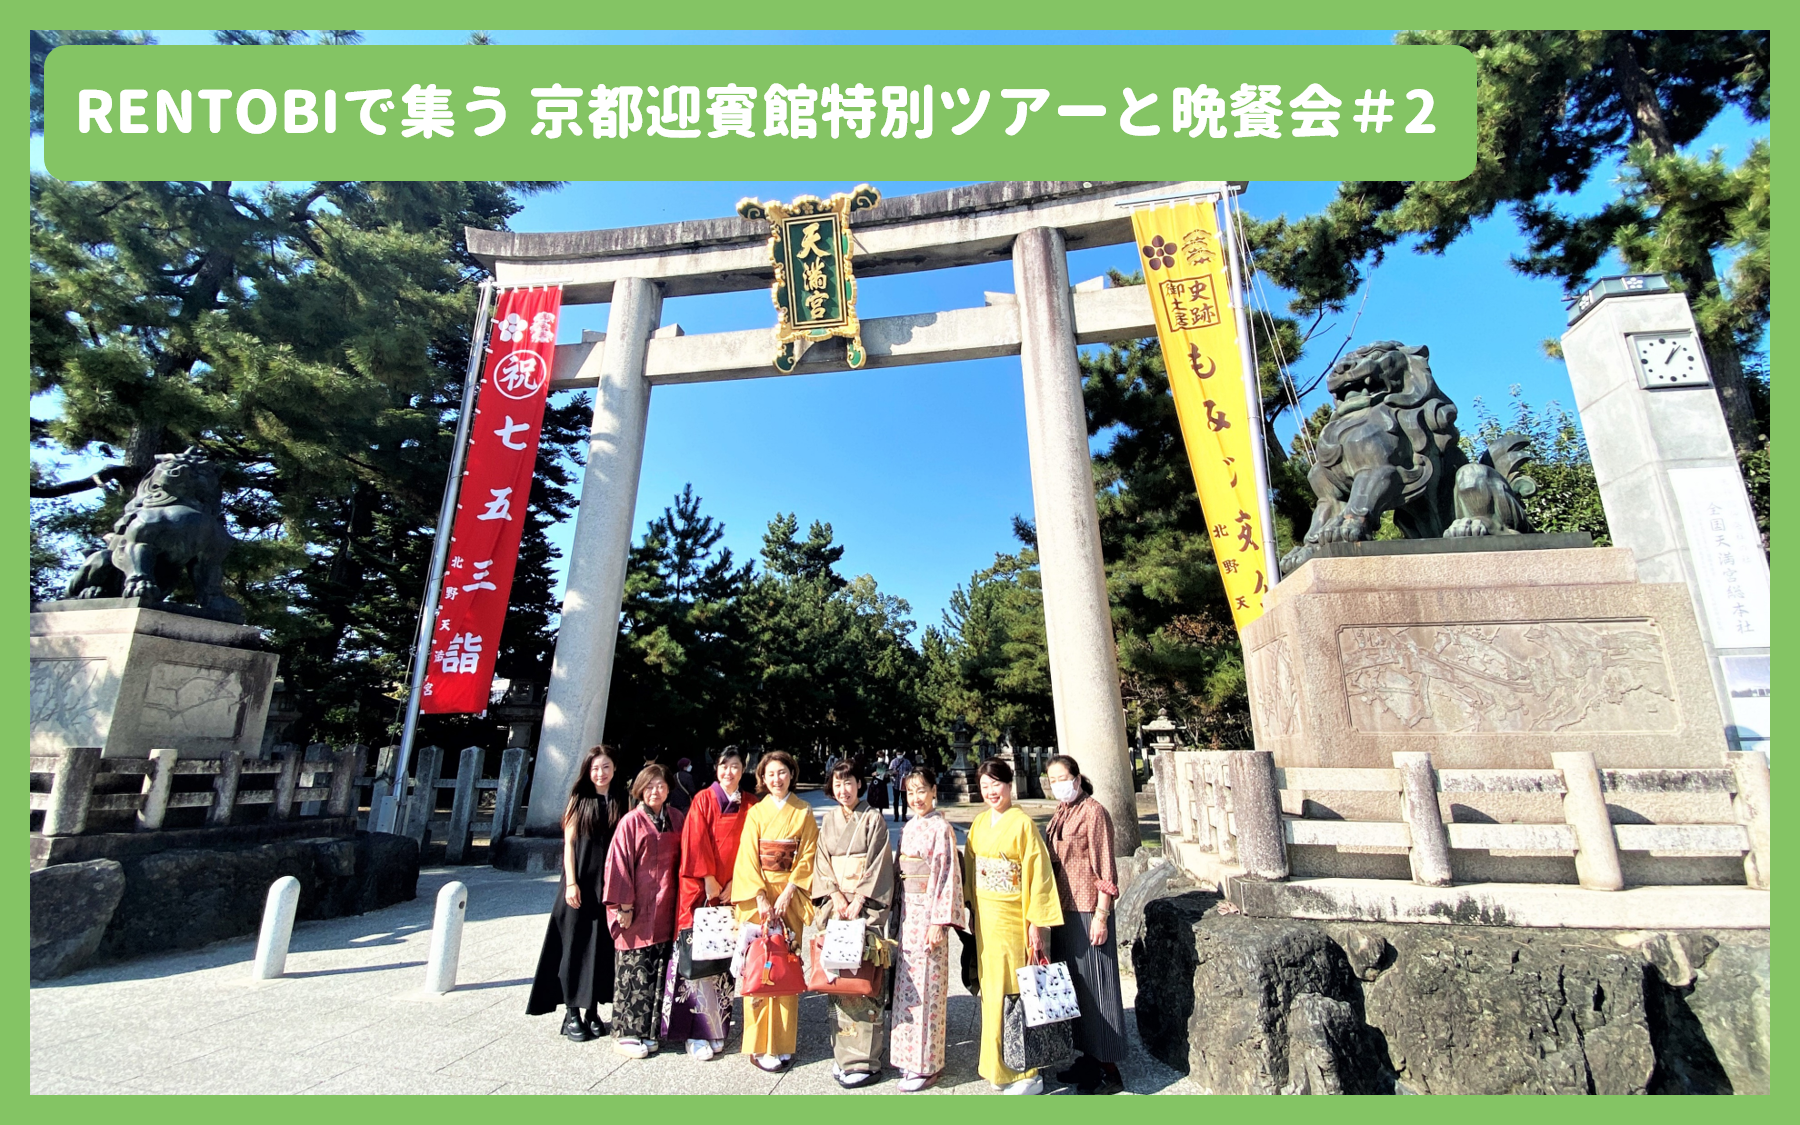 『RENTOBIで集う 京都迎賓館特別ツアーと晩餐会』が開催されました！#2【京都西陣ツアー】